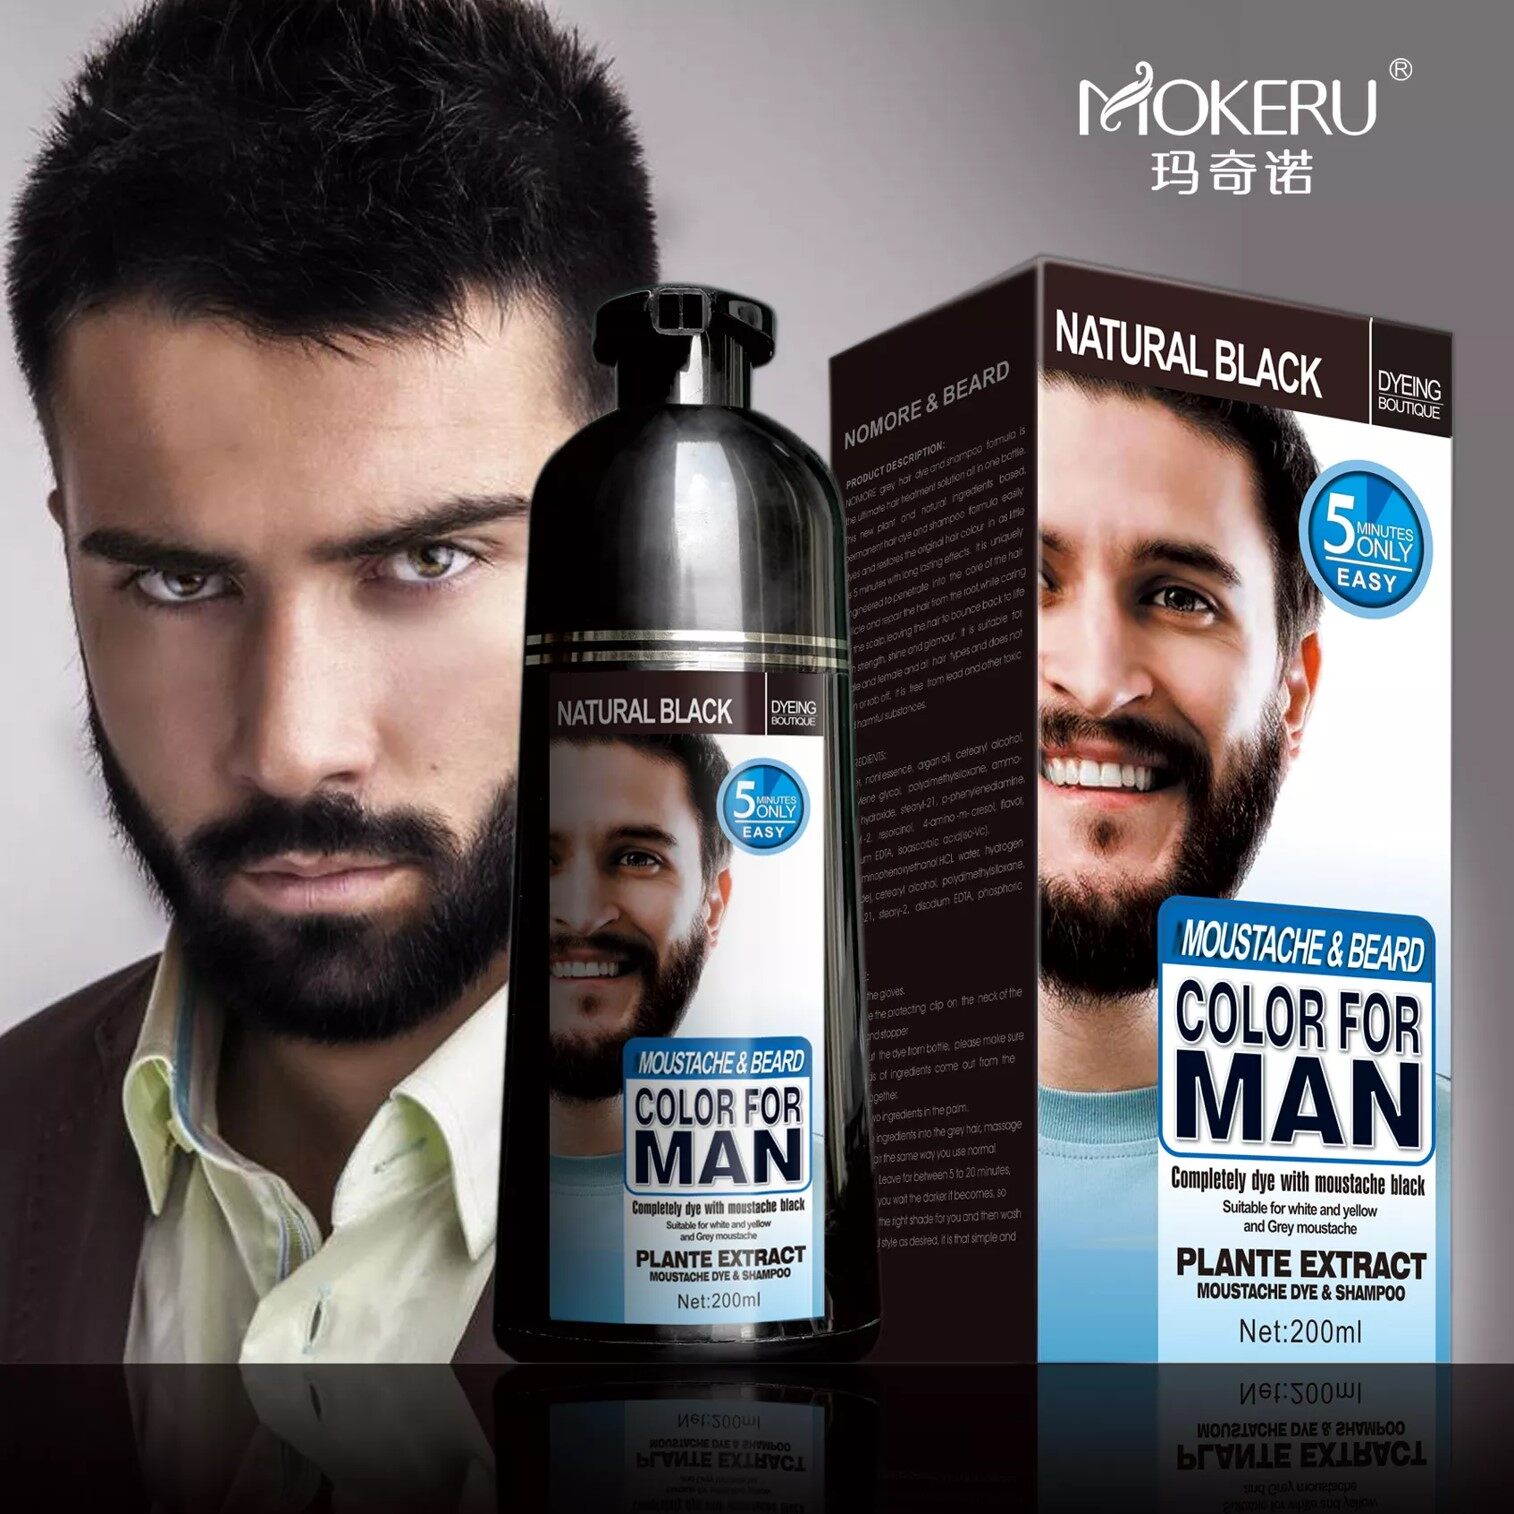 MOKERU black color dye shampoo for beard&hair 5 minutes fast color แชมพูเปลี่ยนสีผมและหนวดเคราภายใน 5 นาที สีดำธรรมชาติ